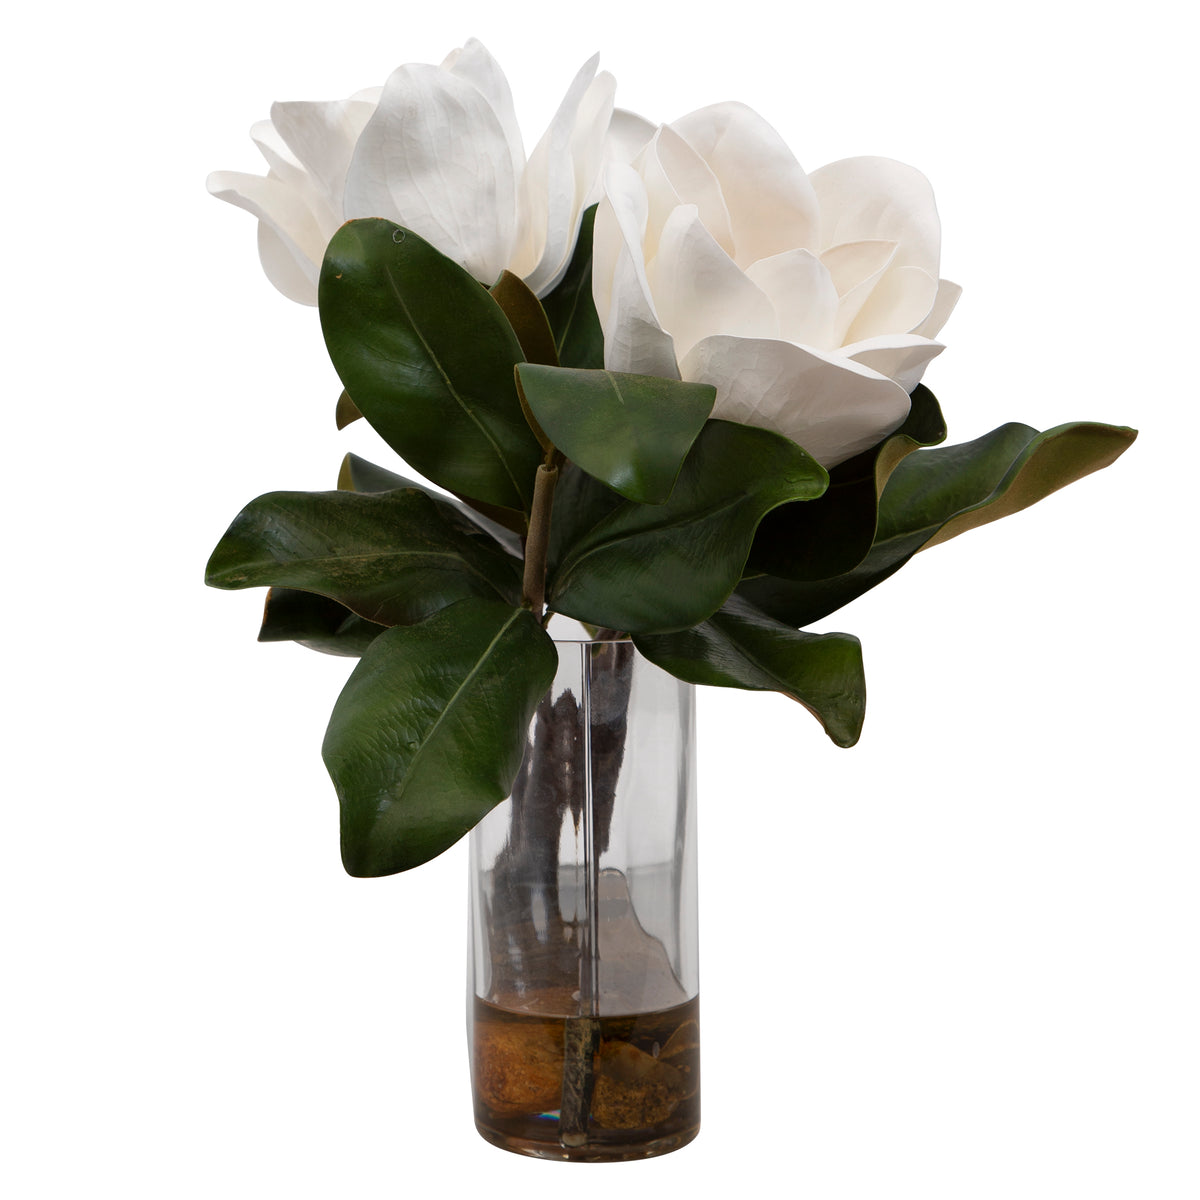 Middleton Magnolia Flower Centerpiece